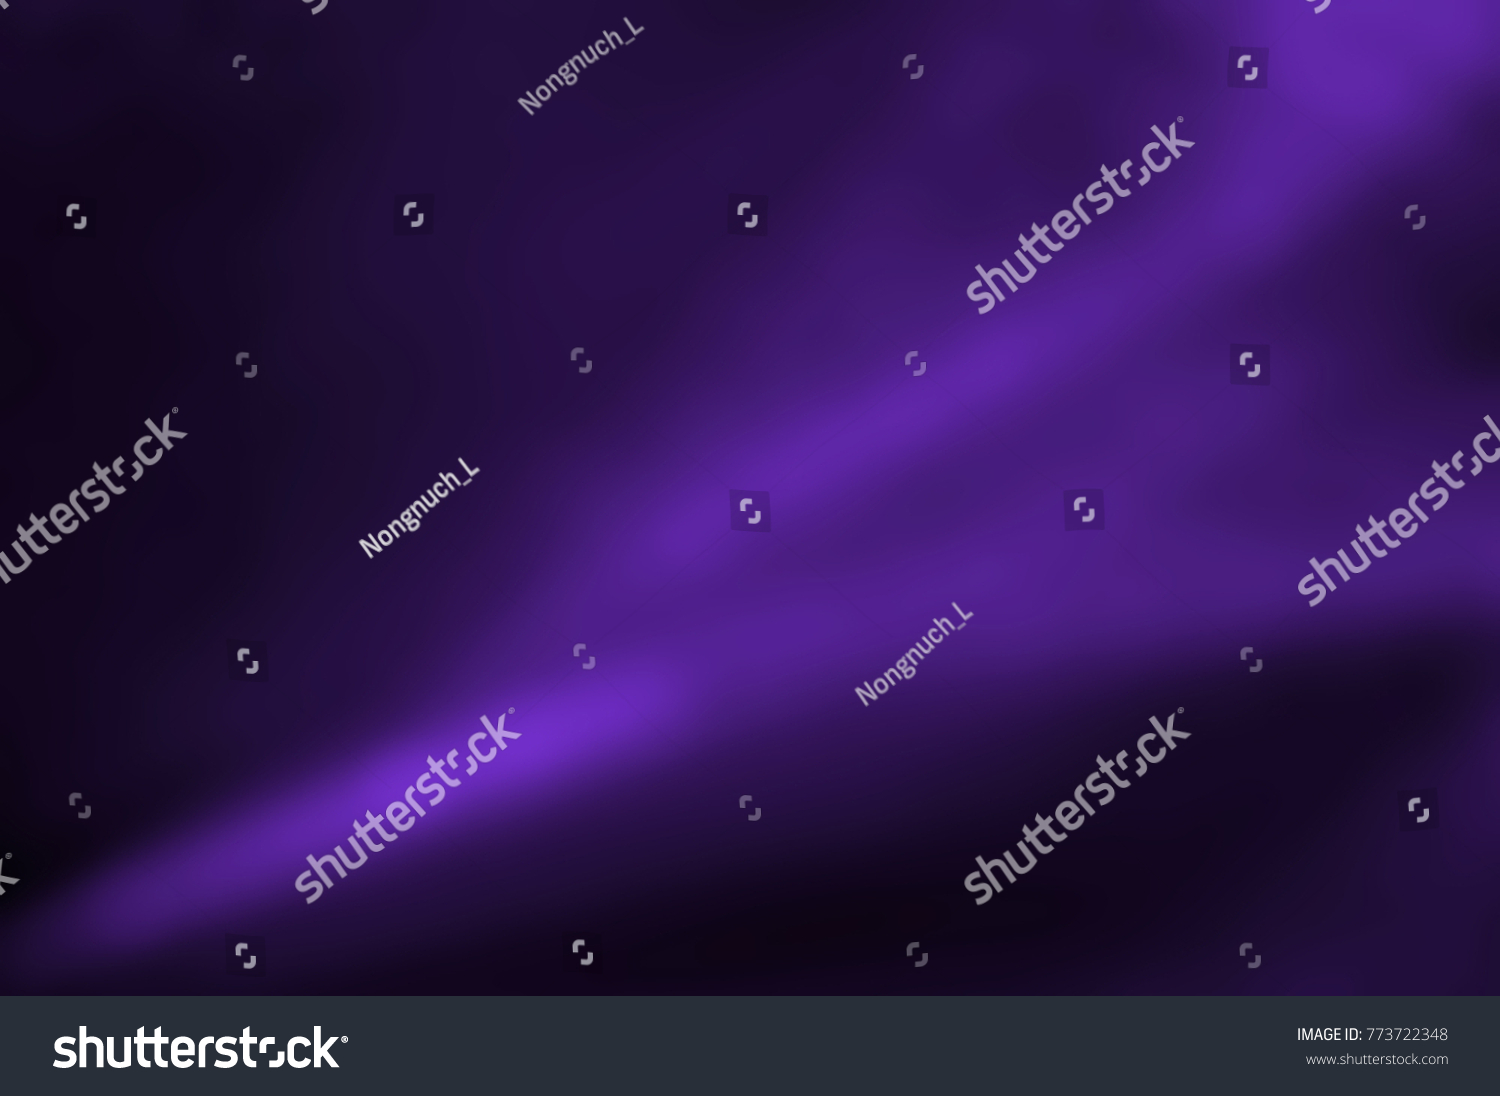 Photo image backdrop. Ultra violet color blurred abstract with light background.Ultra violet ,purple color elegance and smooth for backdrop or illustration artwork design. #773722348